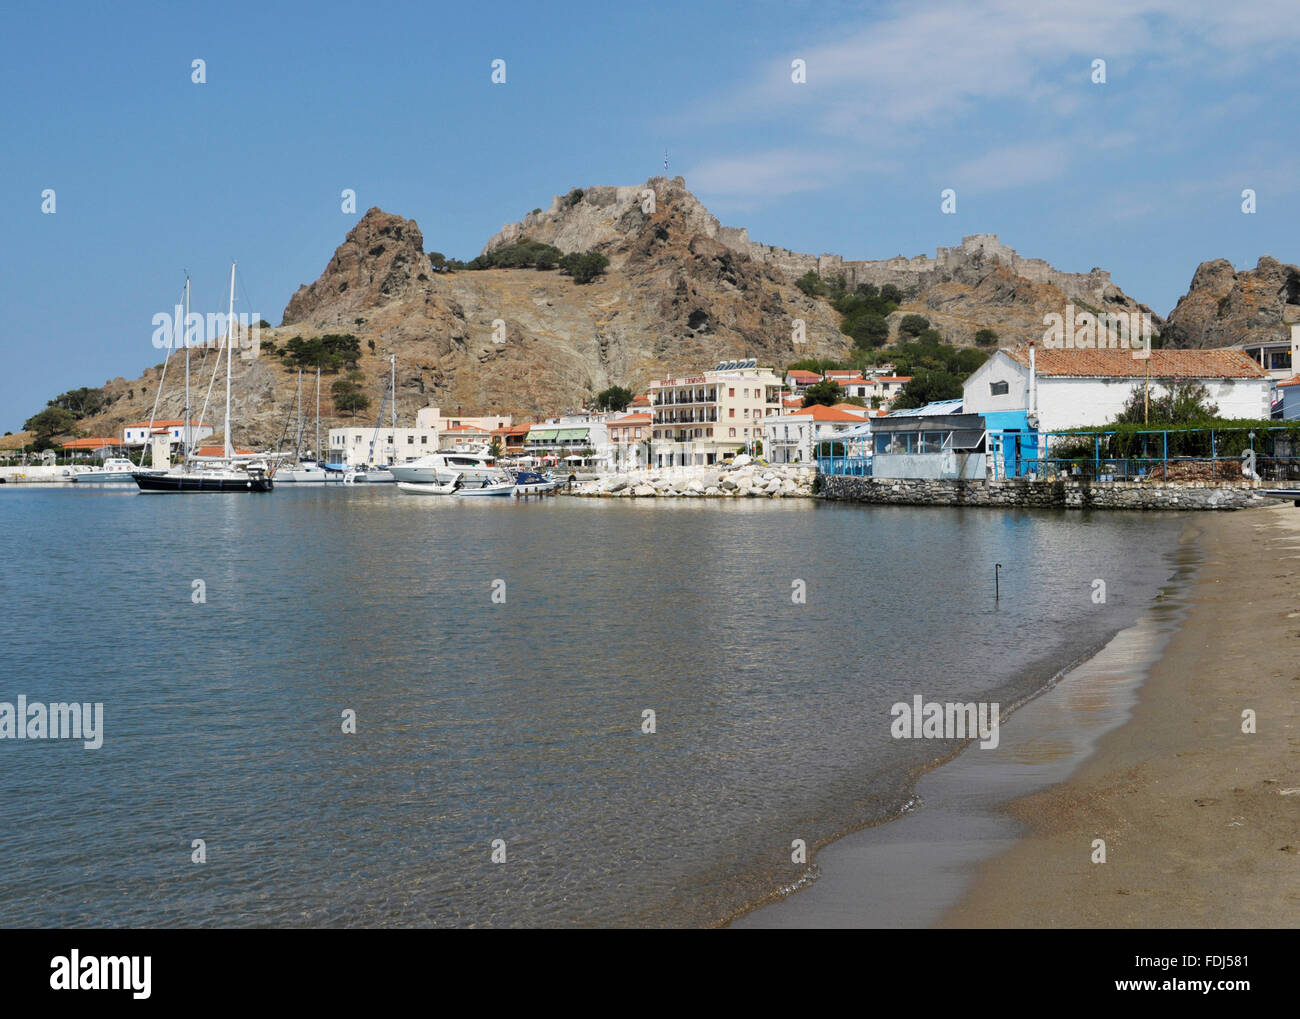 the town of Myrina, Lemnos Island (Limnos), Greece Stock Photo